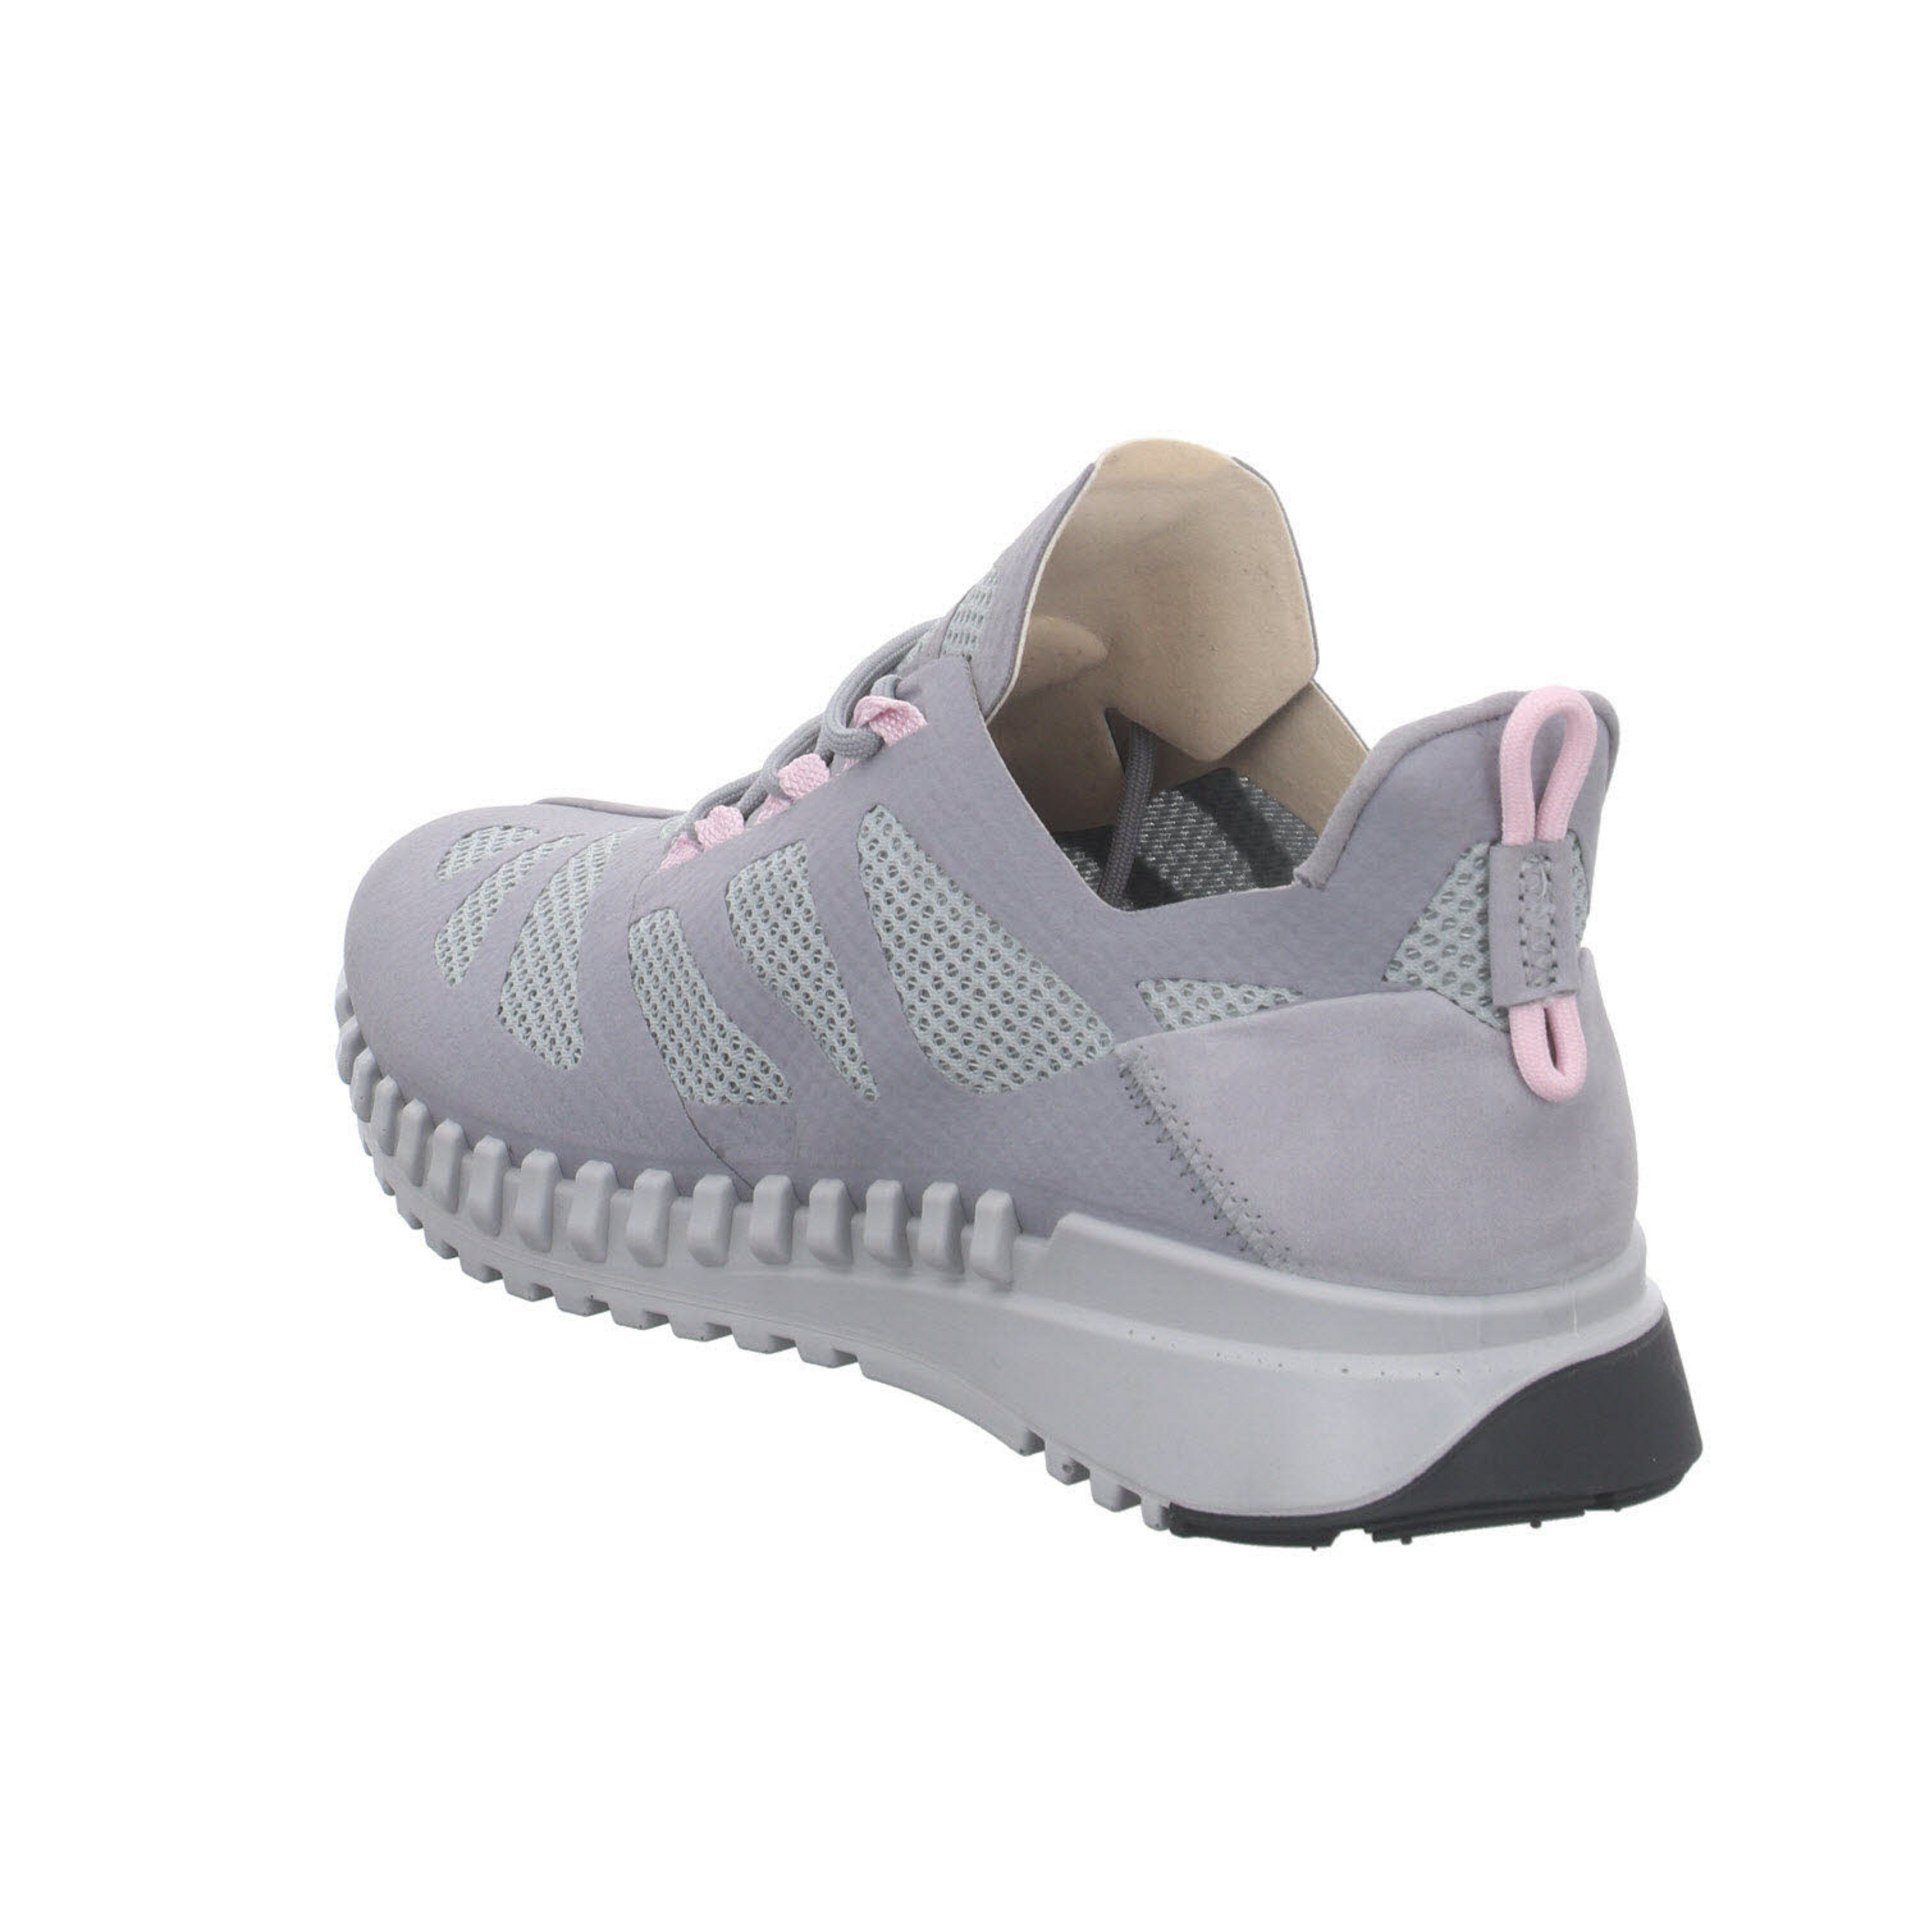 Schnürschuh Leder-/Textilkombination Zipflex Schuhe Damen silvergrey/silvergre Sneaker Ecco Sneaker